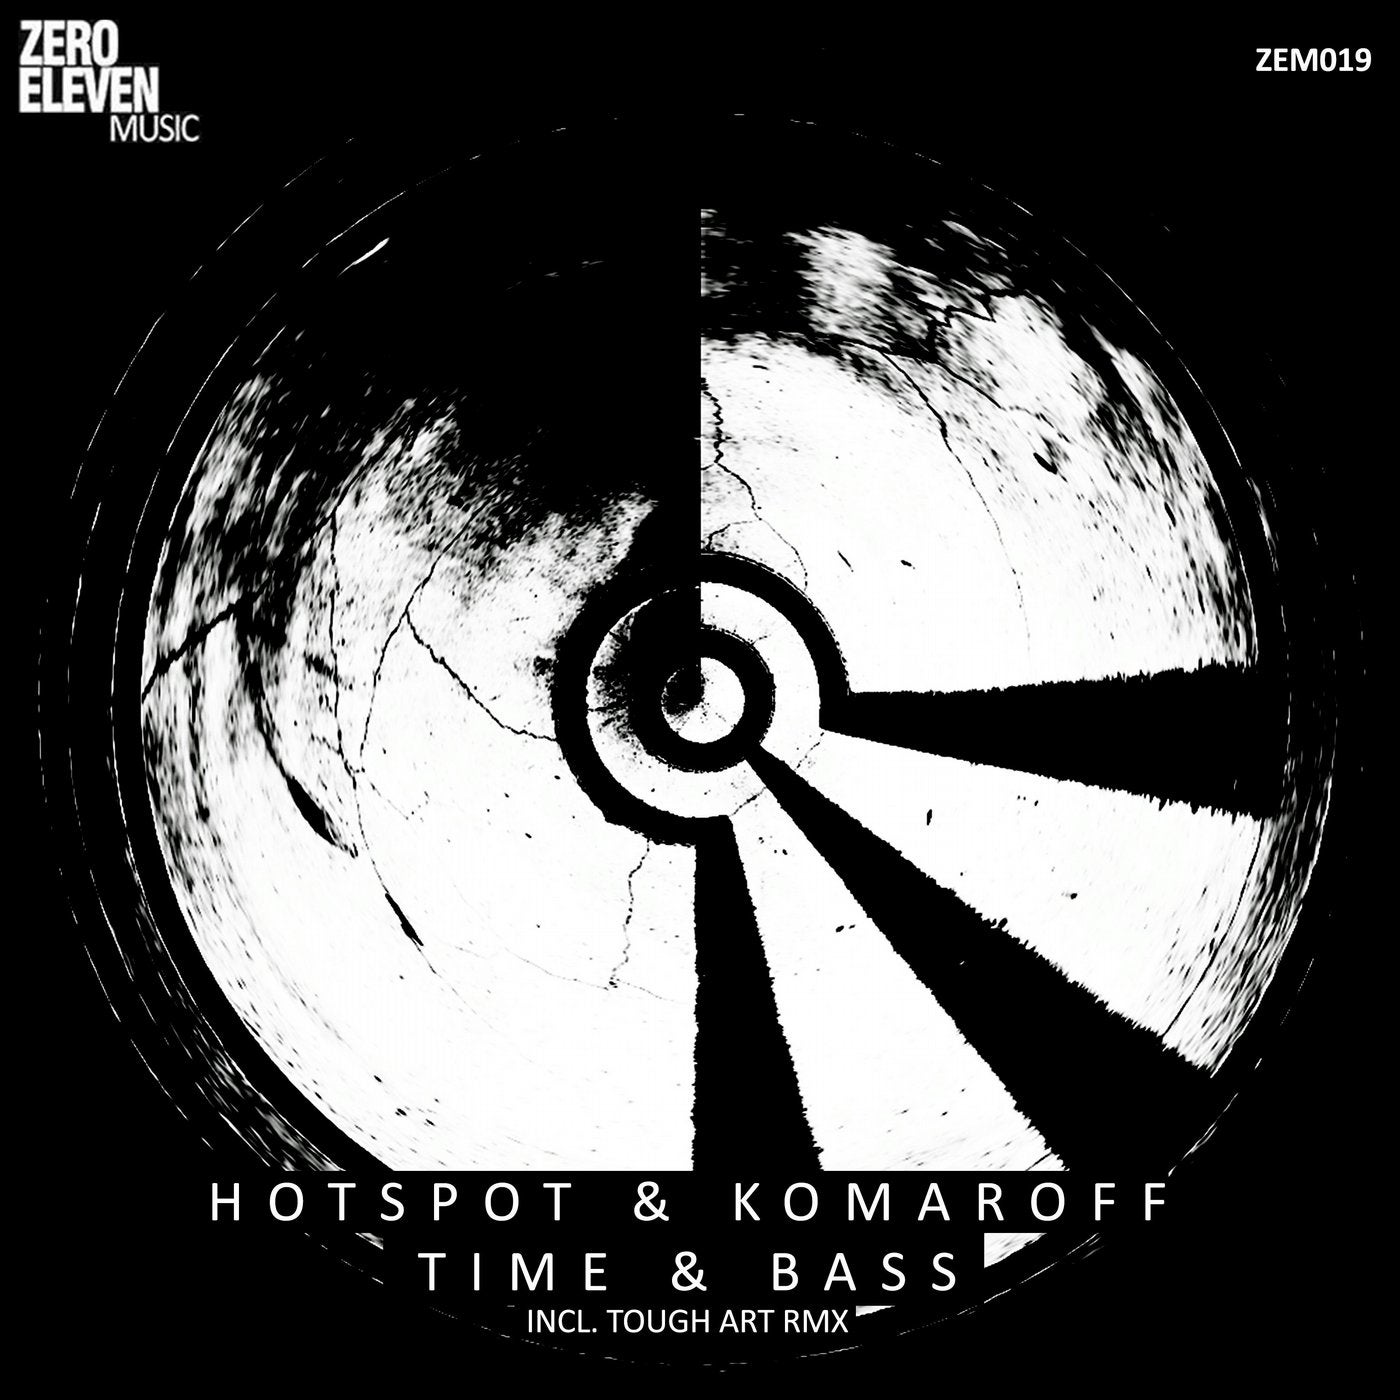 Time & Bass